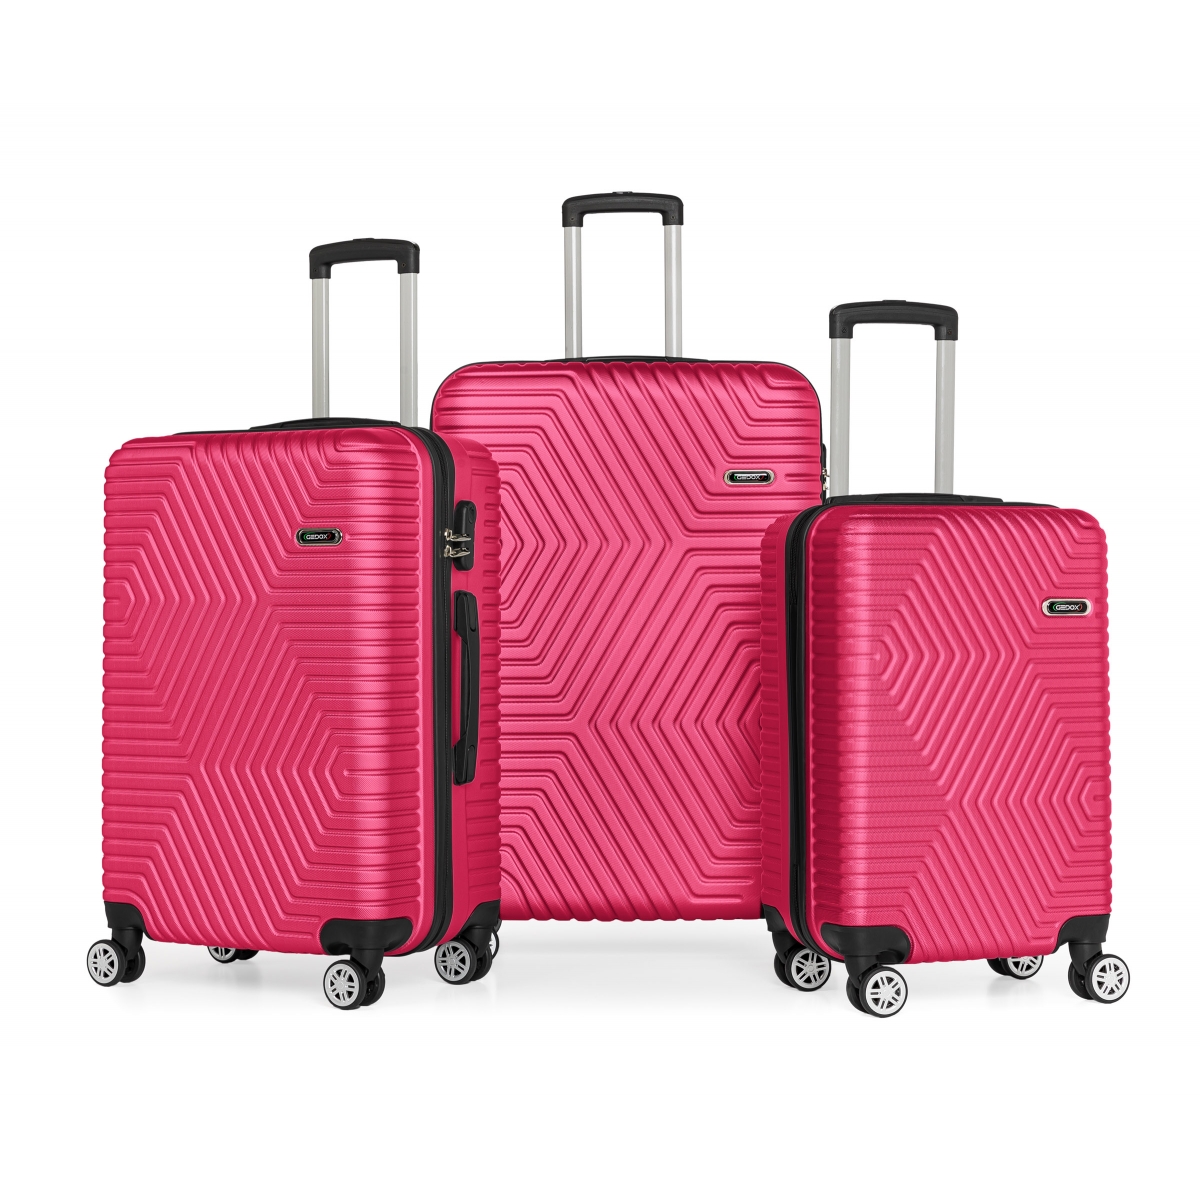 G&D Polo Suitcase ABS 3'lü Lüx Valiz Seyahat Seti - Model:600.10 Fuşya Pembe